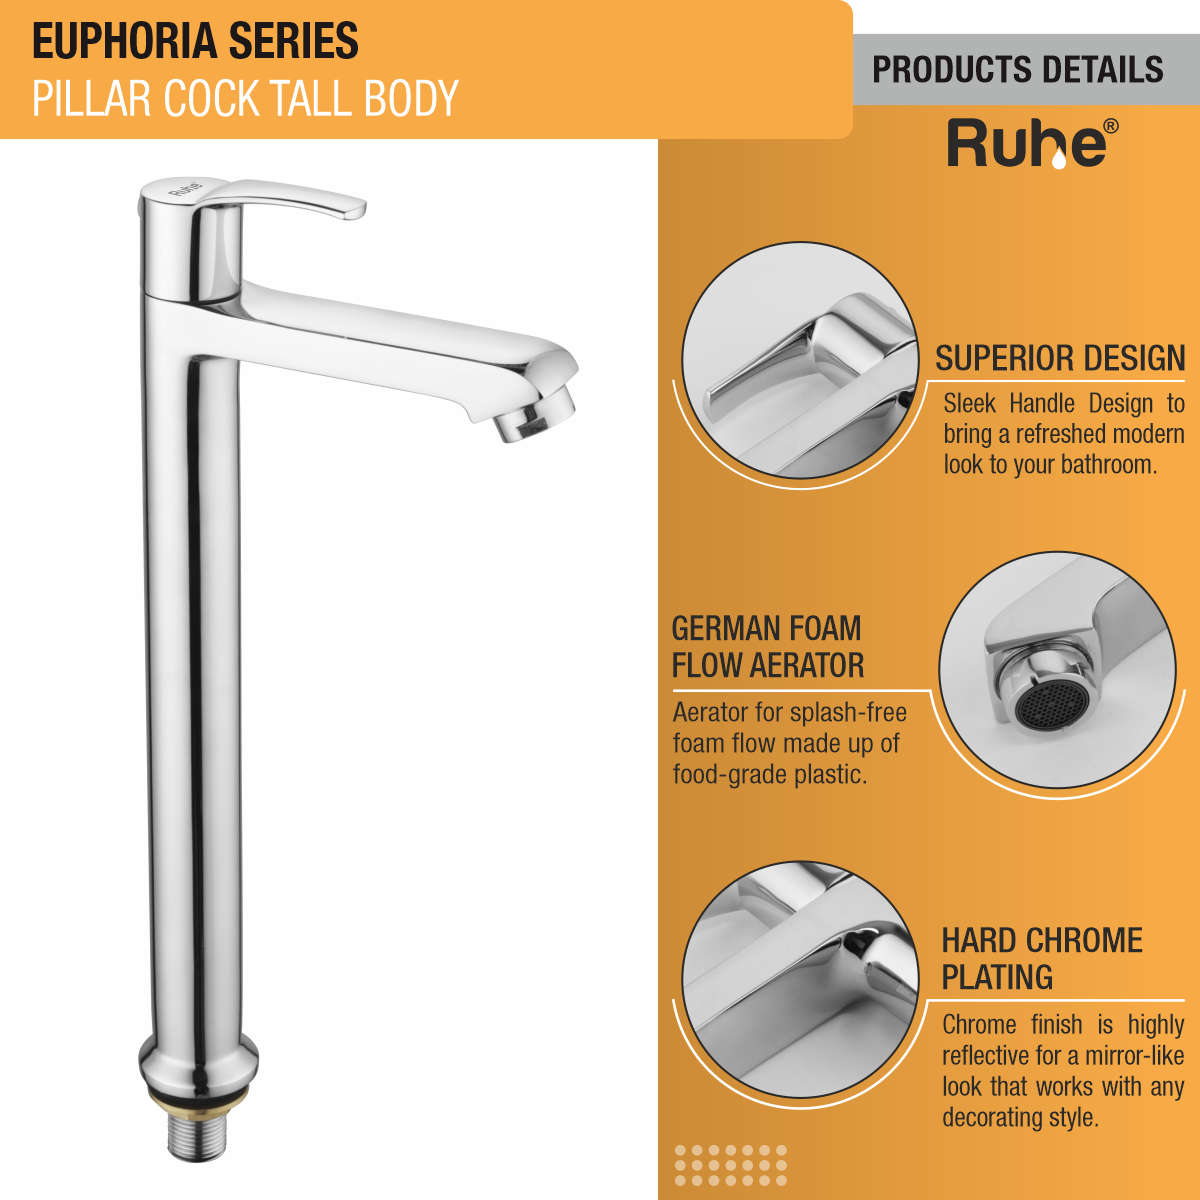 Euphoria Pillar Tap Tall Body Brass Faucet product details